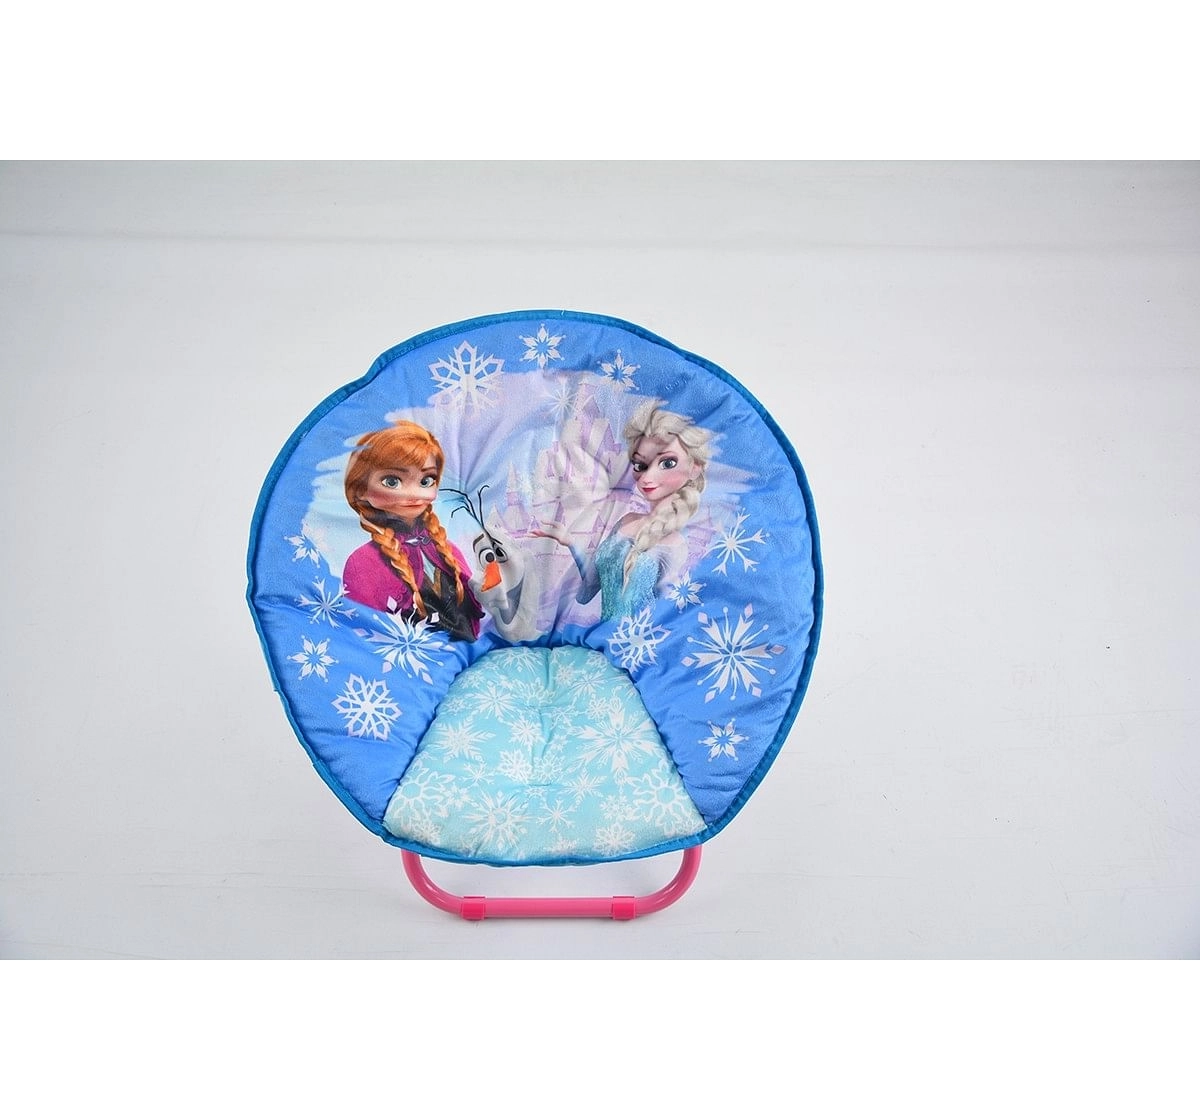 Flourish  Frozen Moon Chair Outdoor Leisure for Kids age 3Y+ 